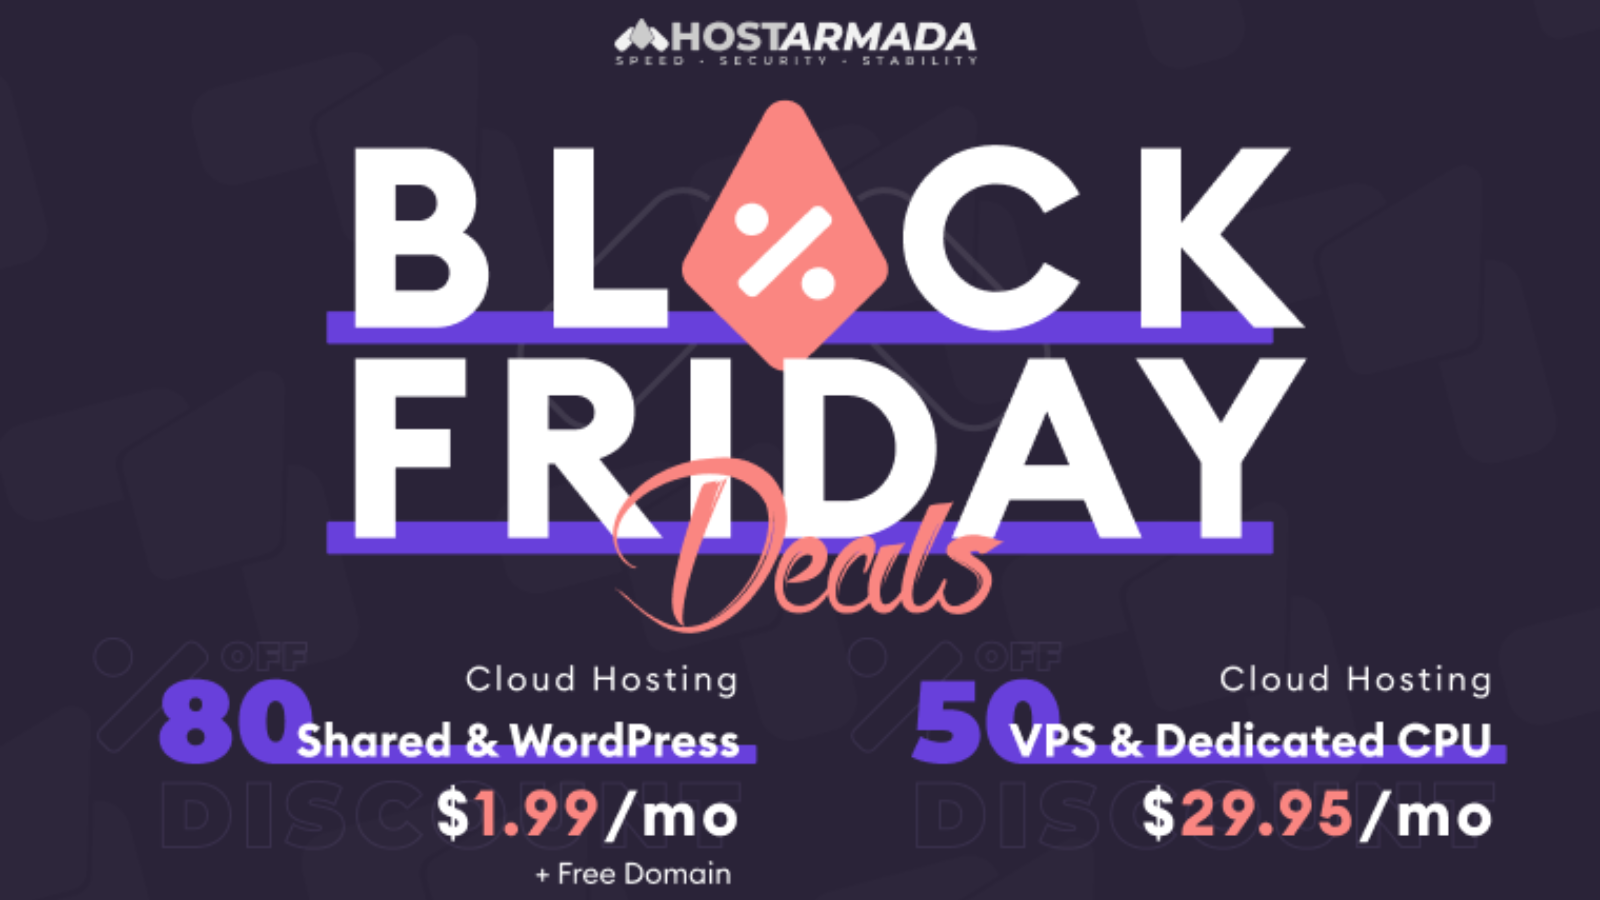 hostarmada black Friday deal